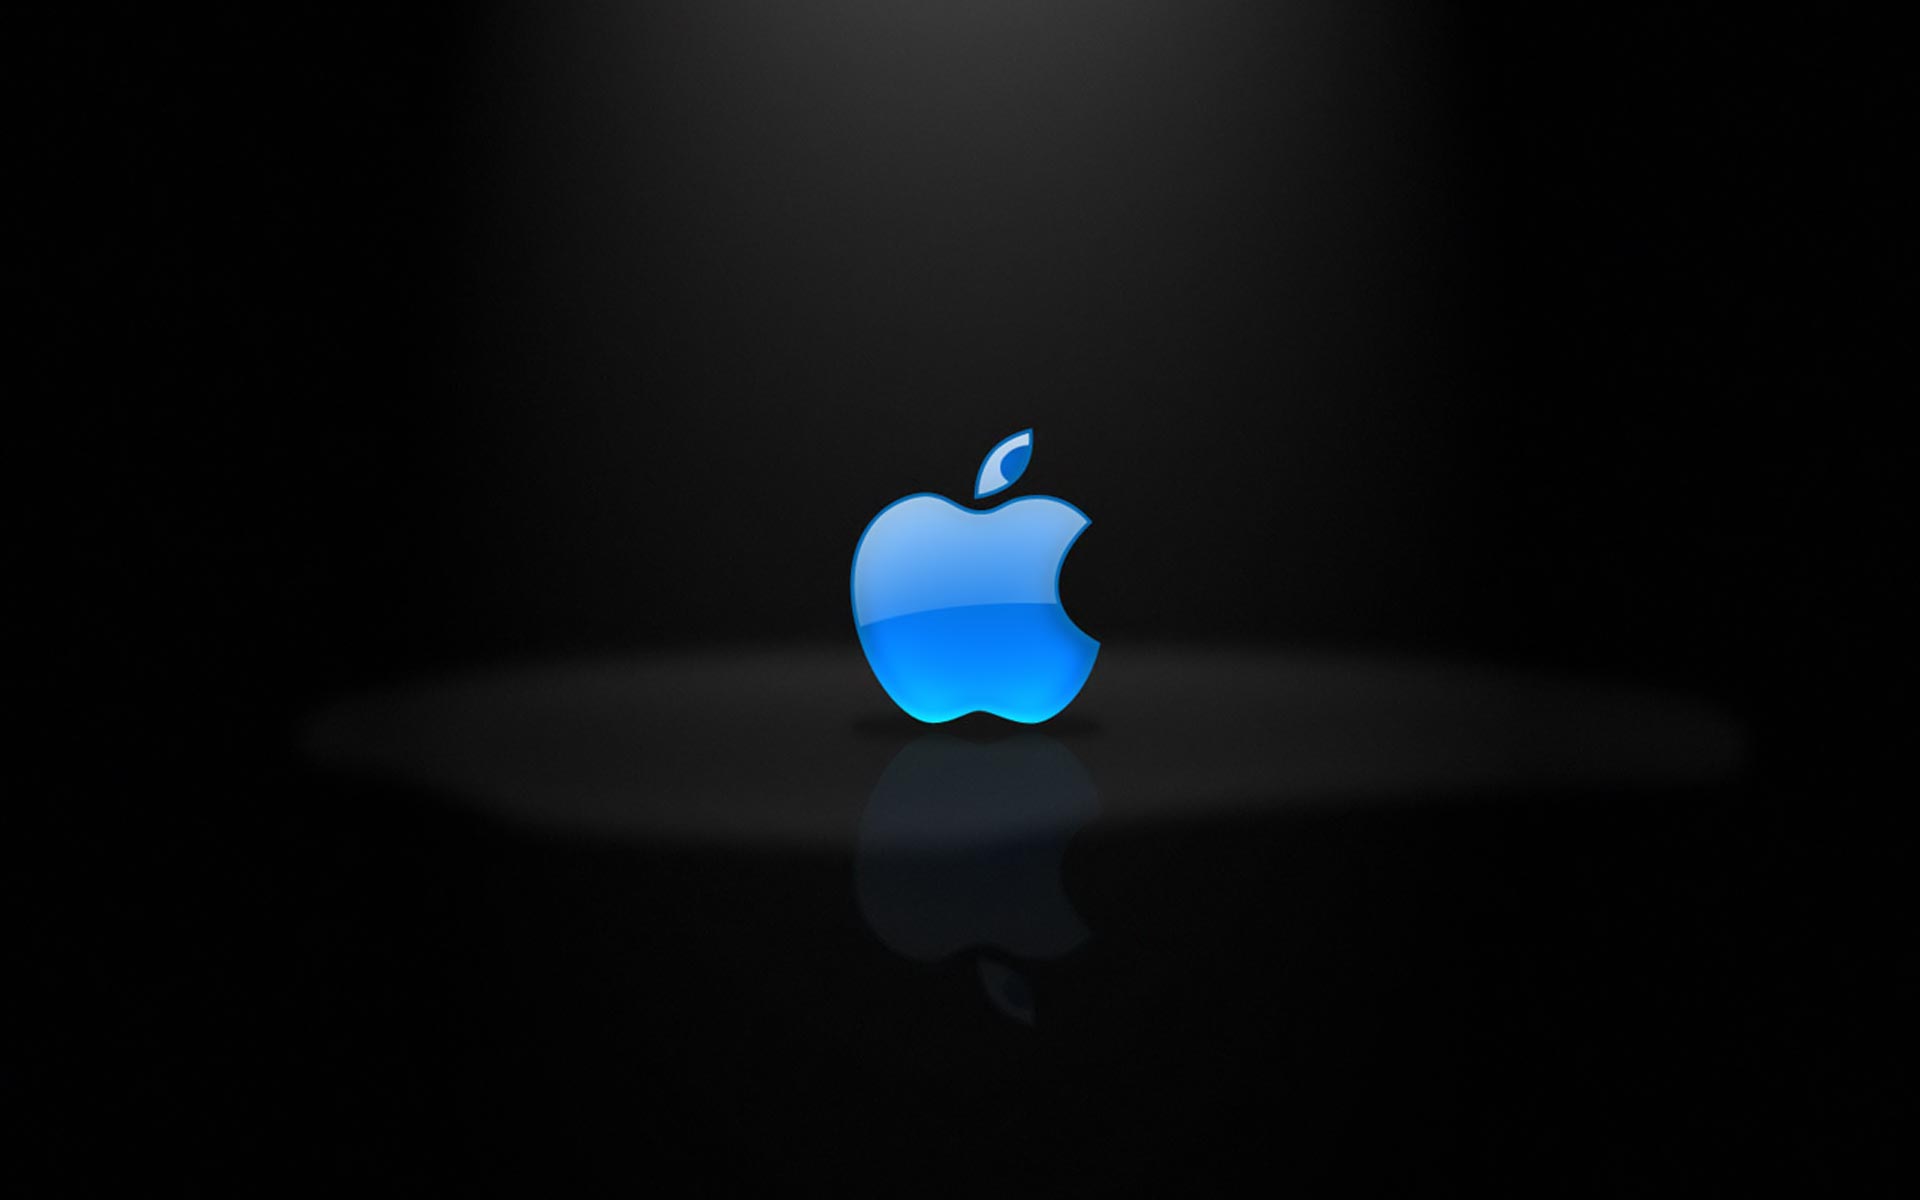 iPhone11papers.com | iPhone11 wallpaper | ng08-apple-logo-blue-orange-dark